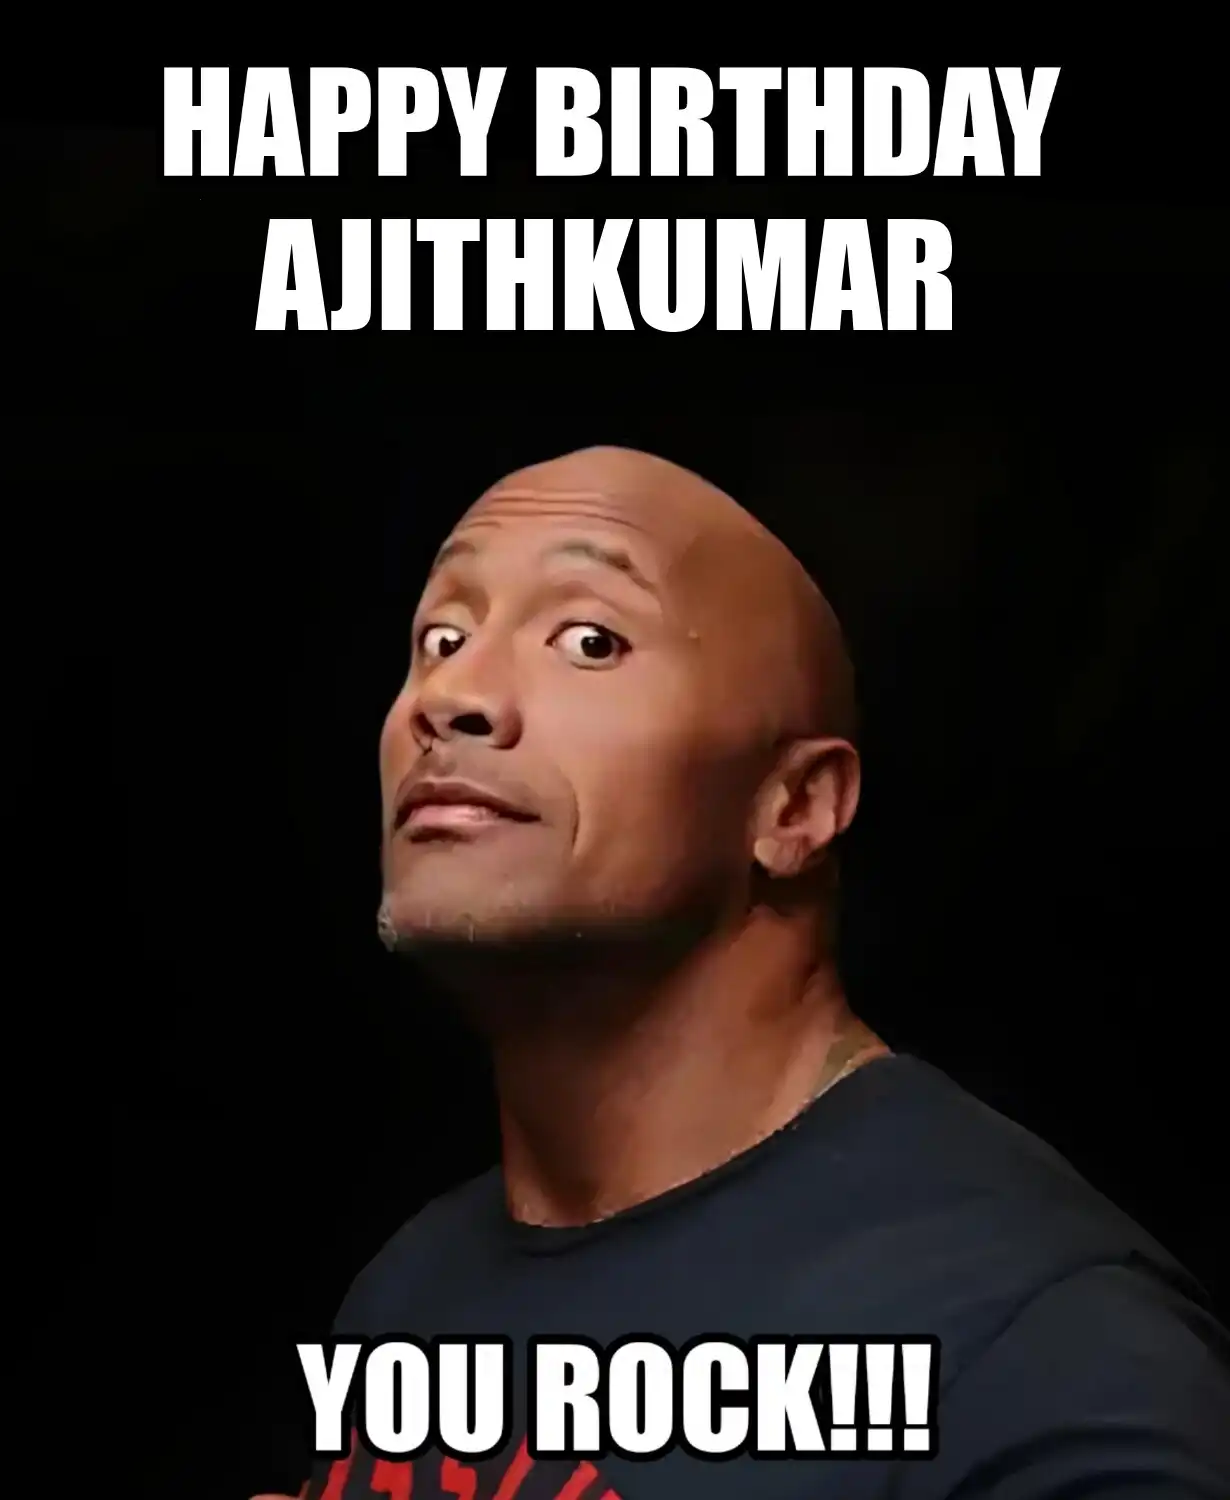 Happy Birthday Ajithkumar You Rock Meme